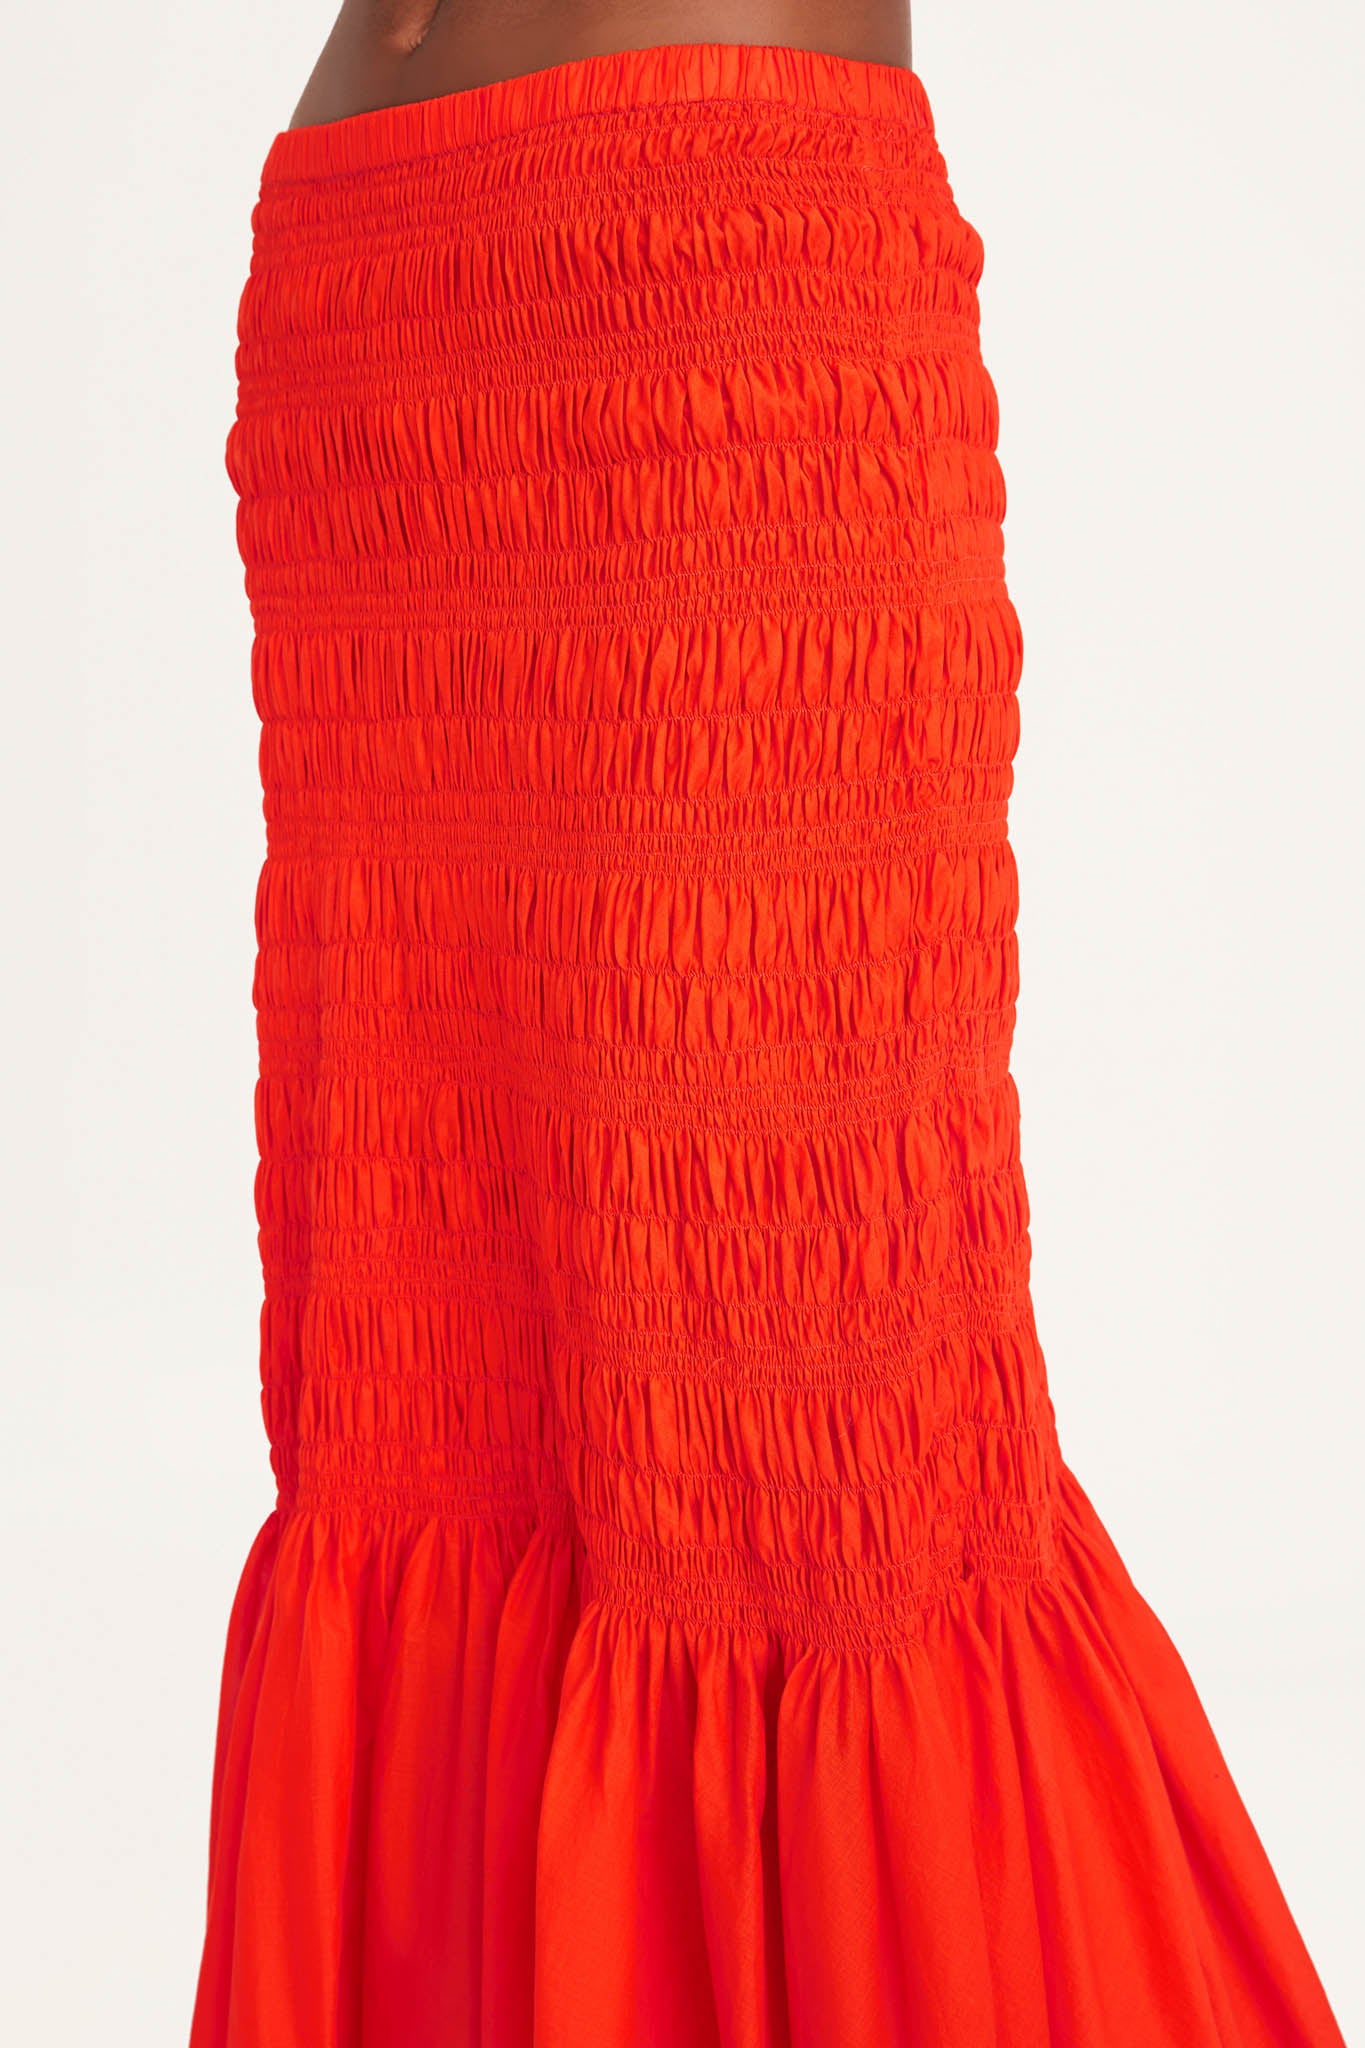 Sereda Skirt in Flame